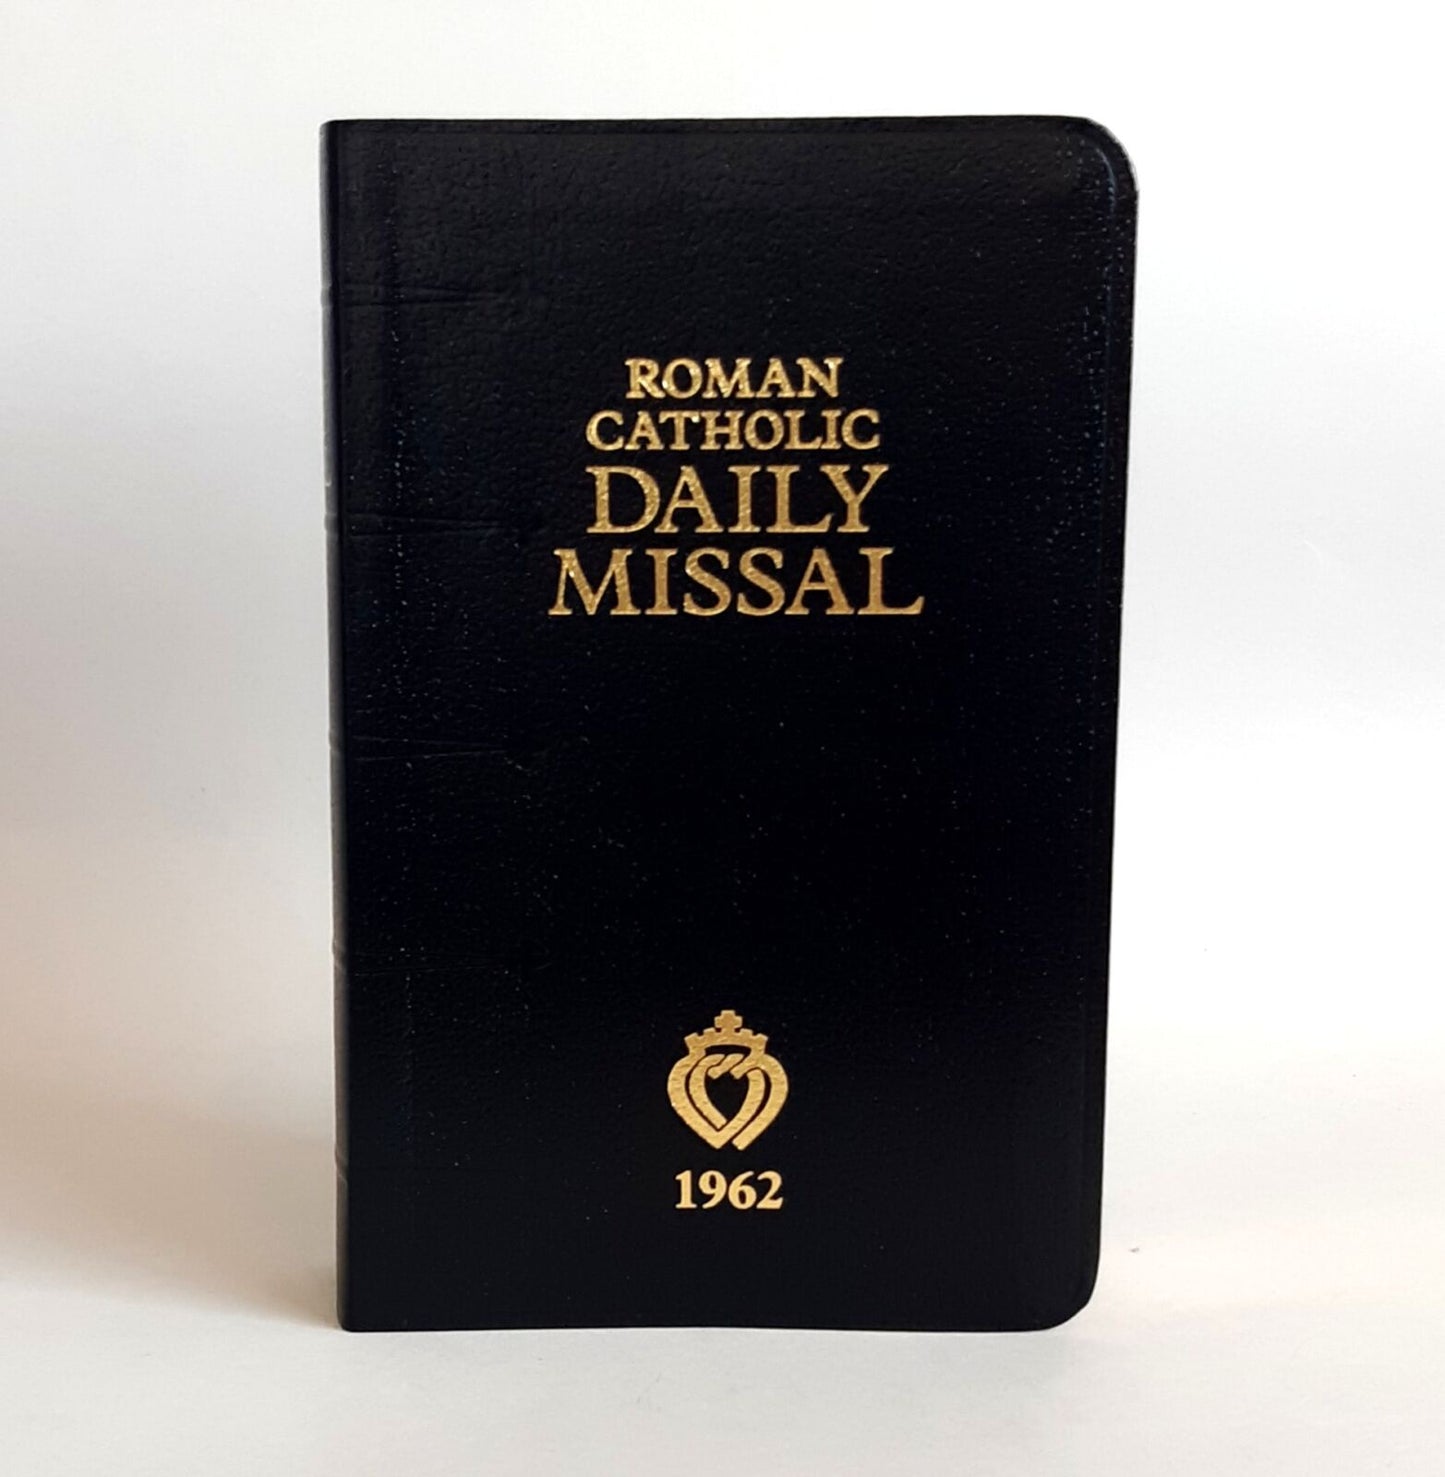 Missal - Daily Latin Mass (Latin/English text)